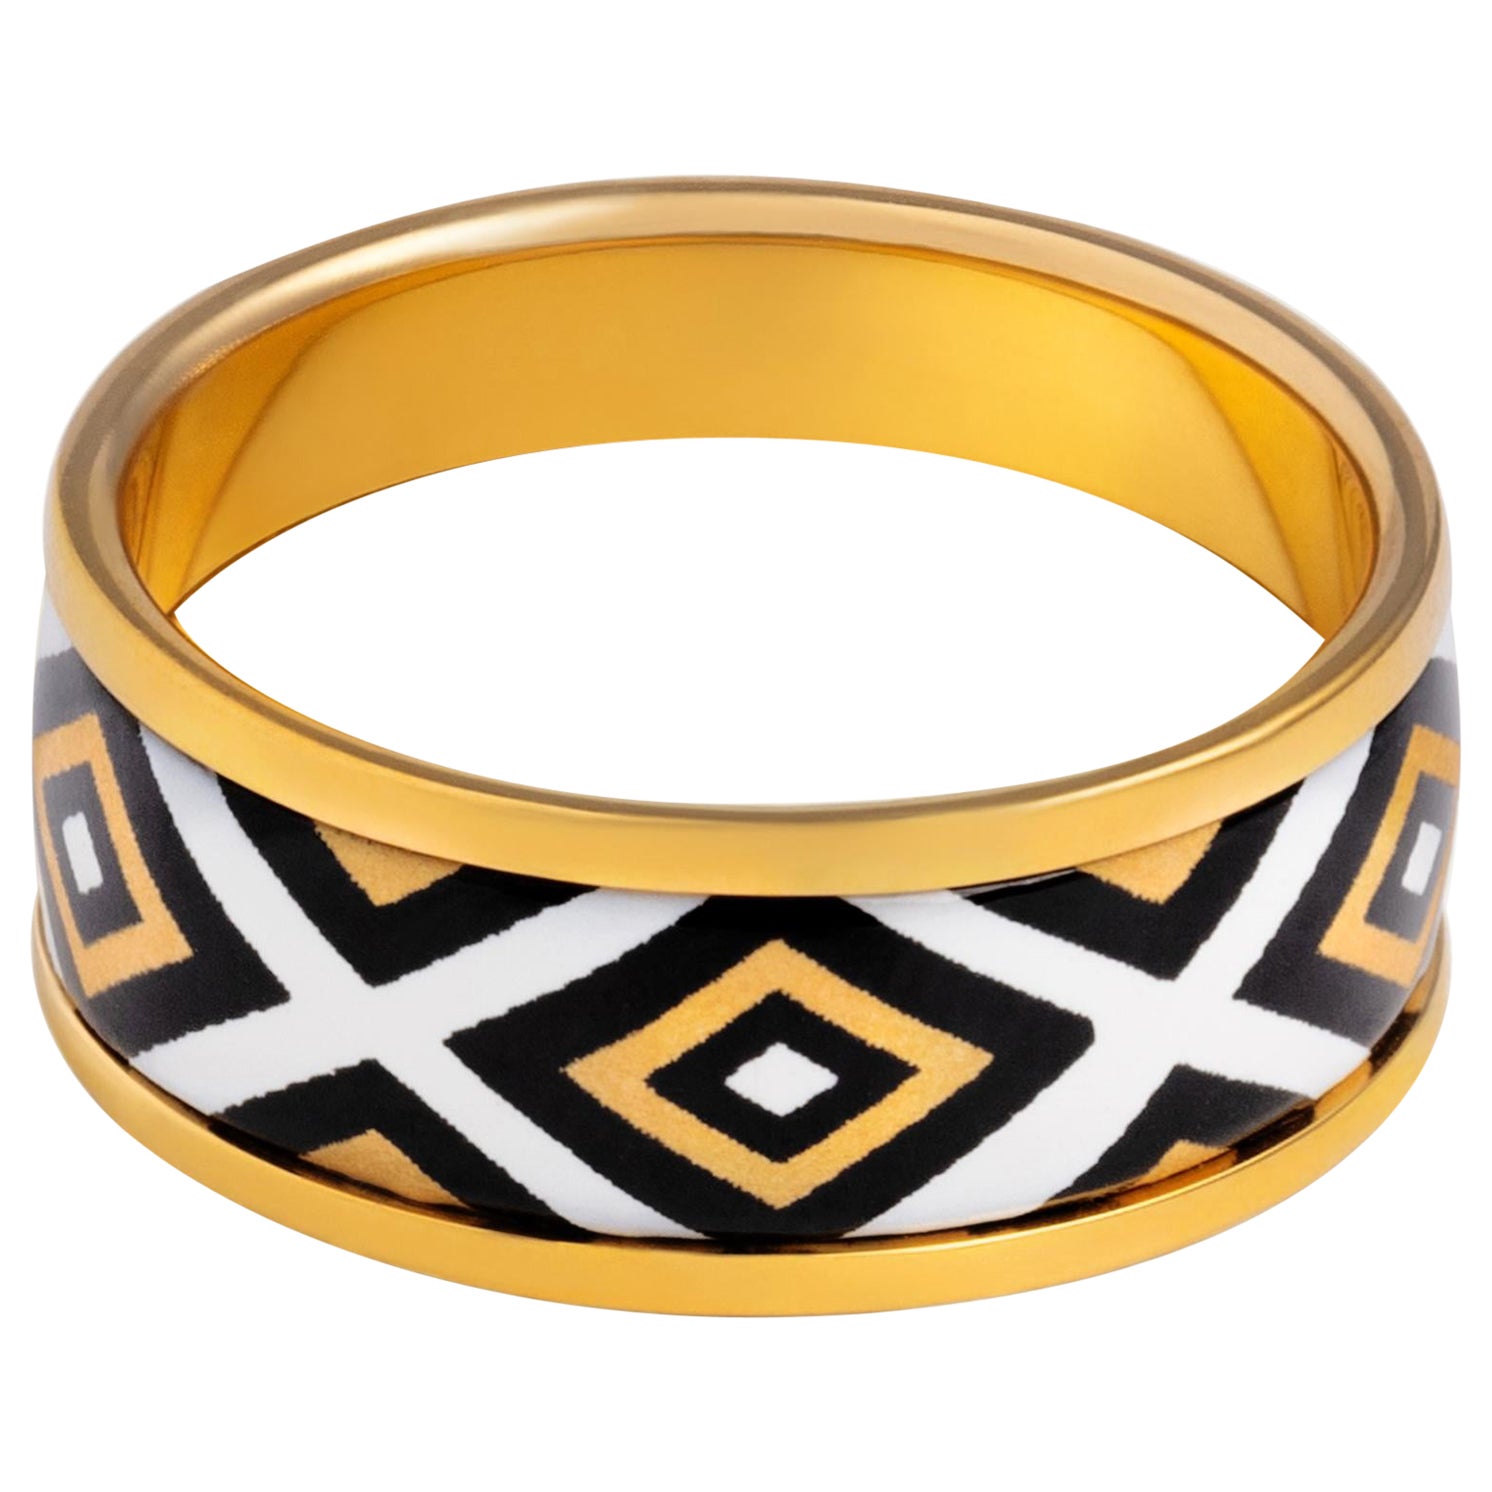 Im Angebot: Handbemalter, vergoldeter, vergoldeter Edelstahl-Ring mit FeuerEmaille-Details ()